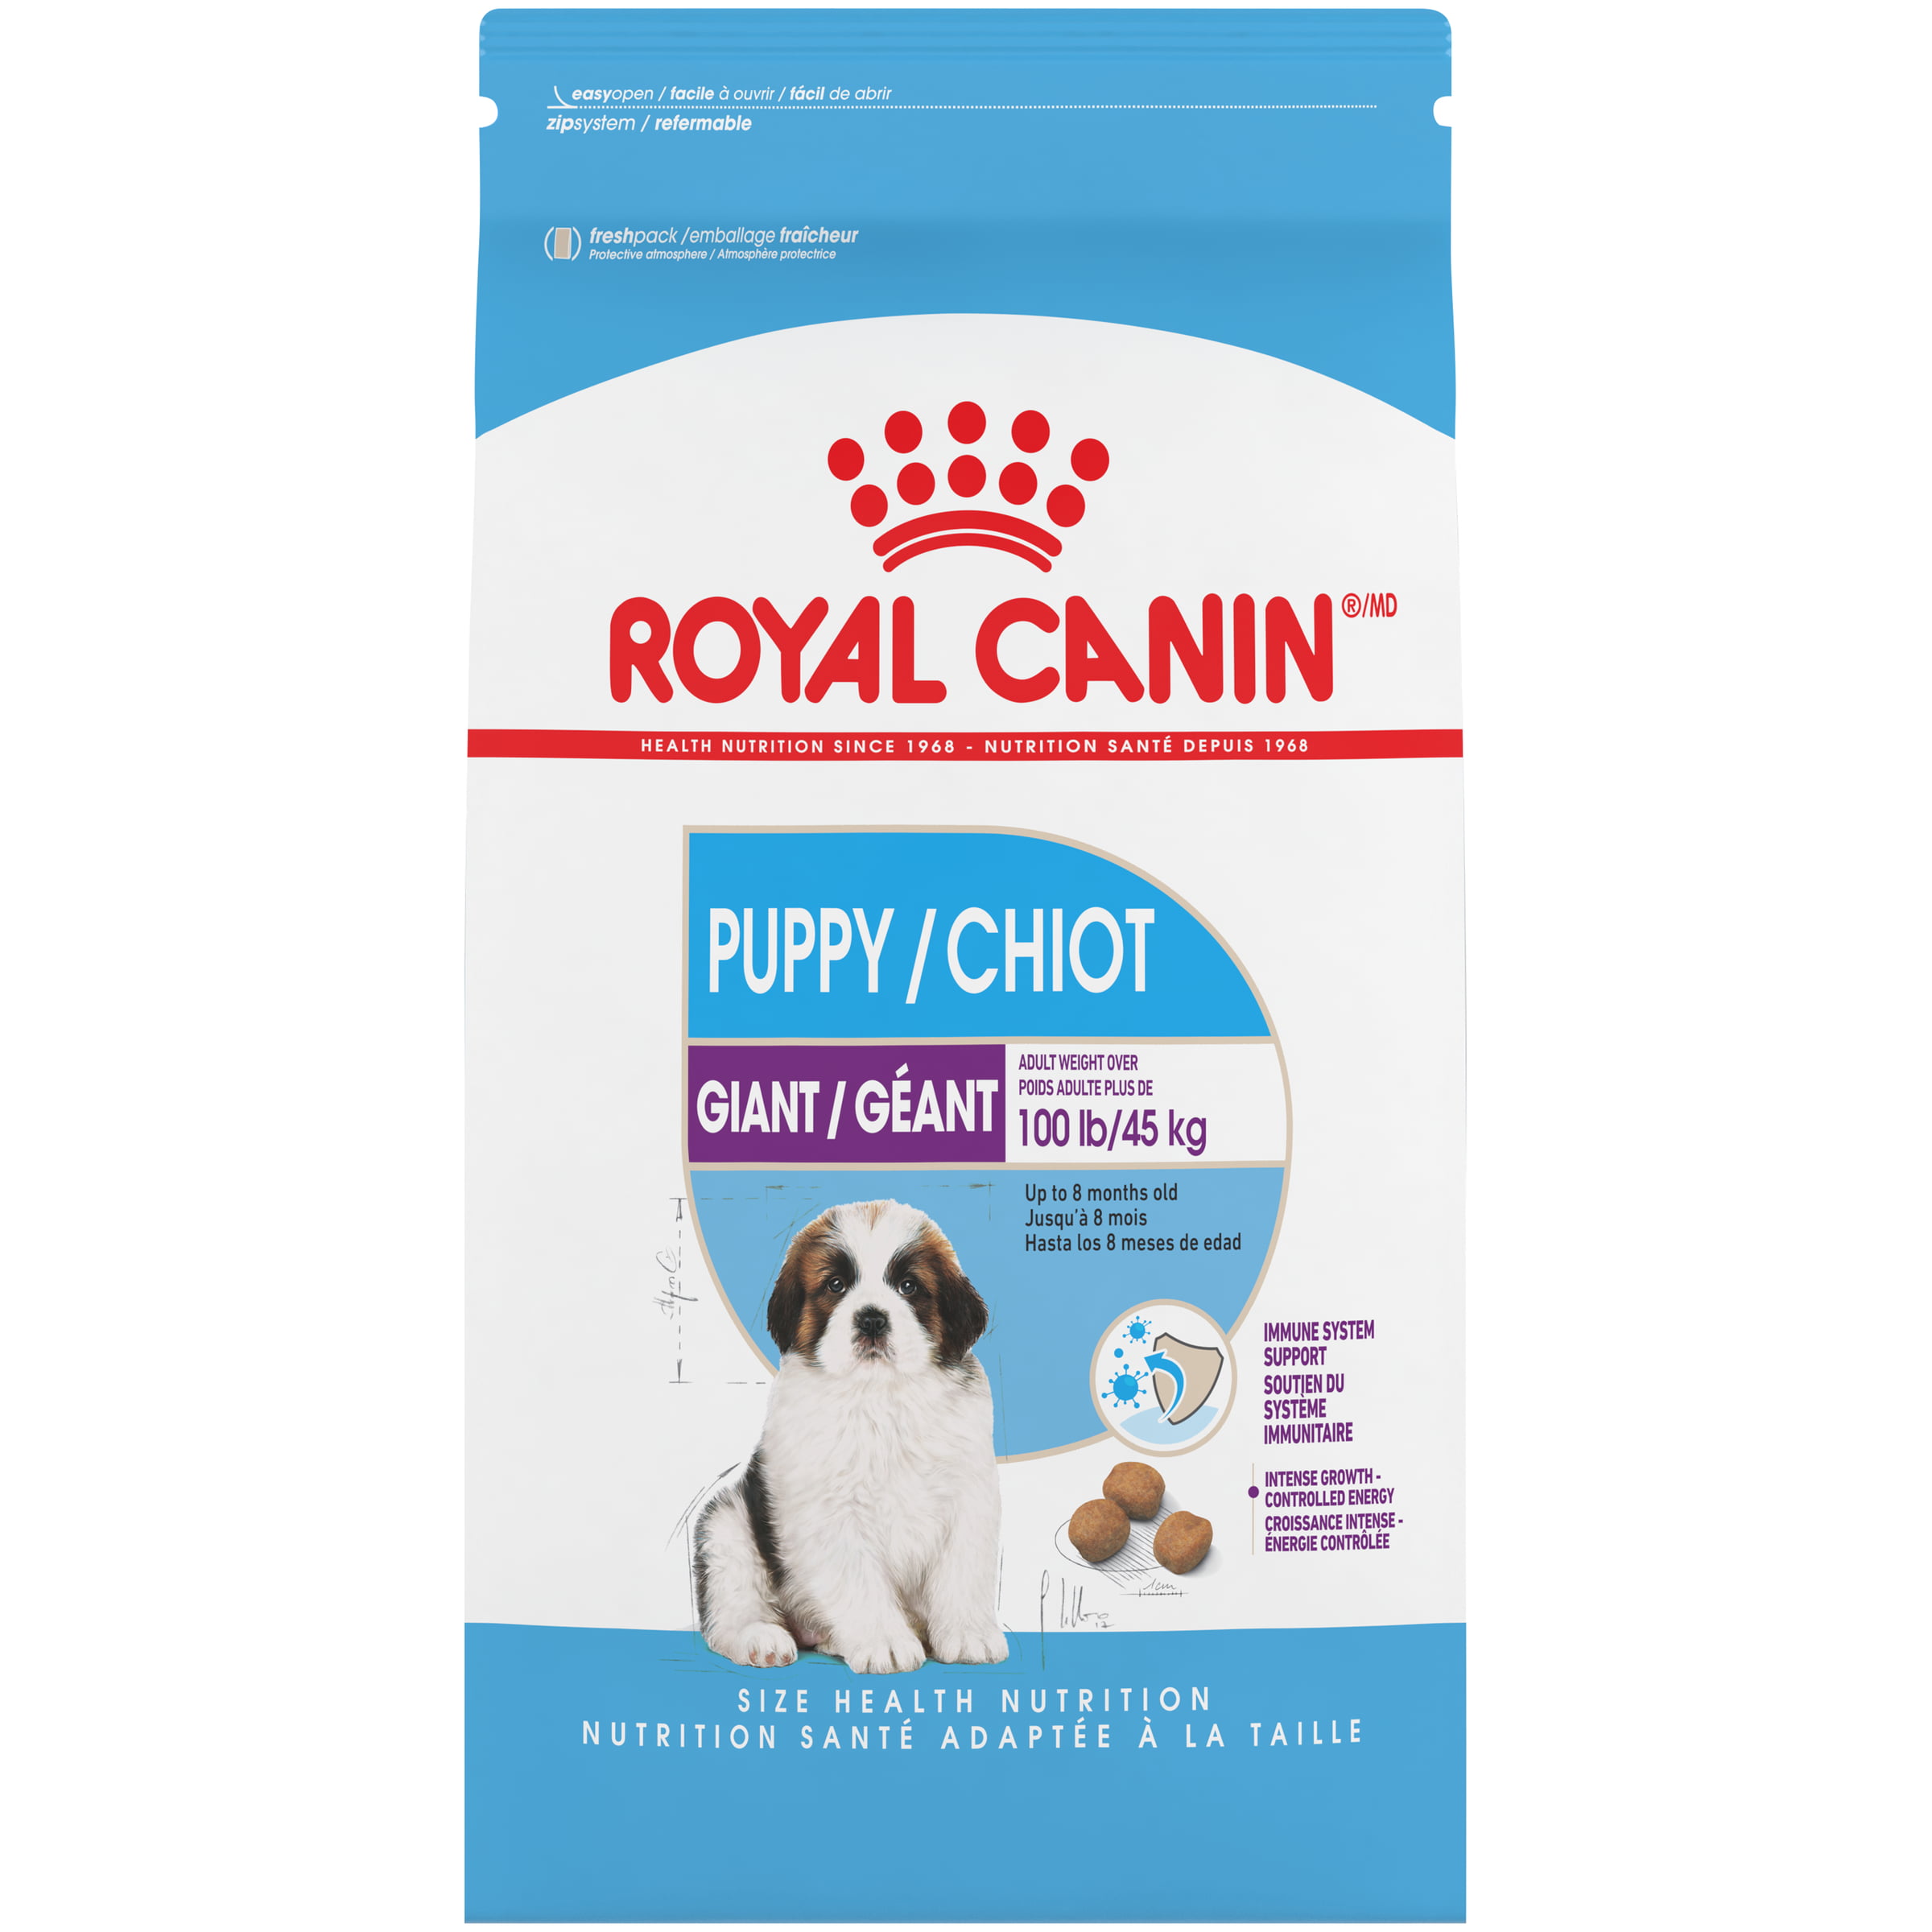 royal canin price list 2018